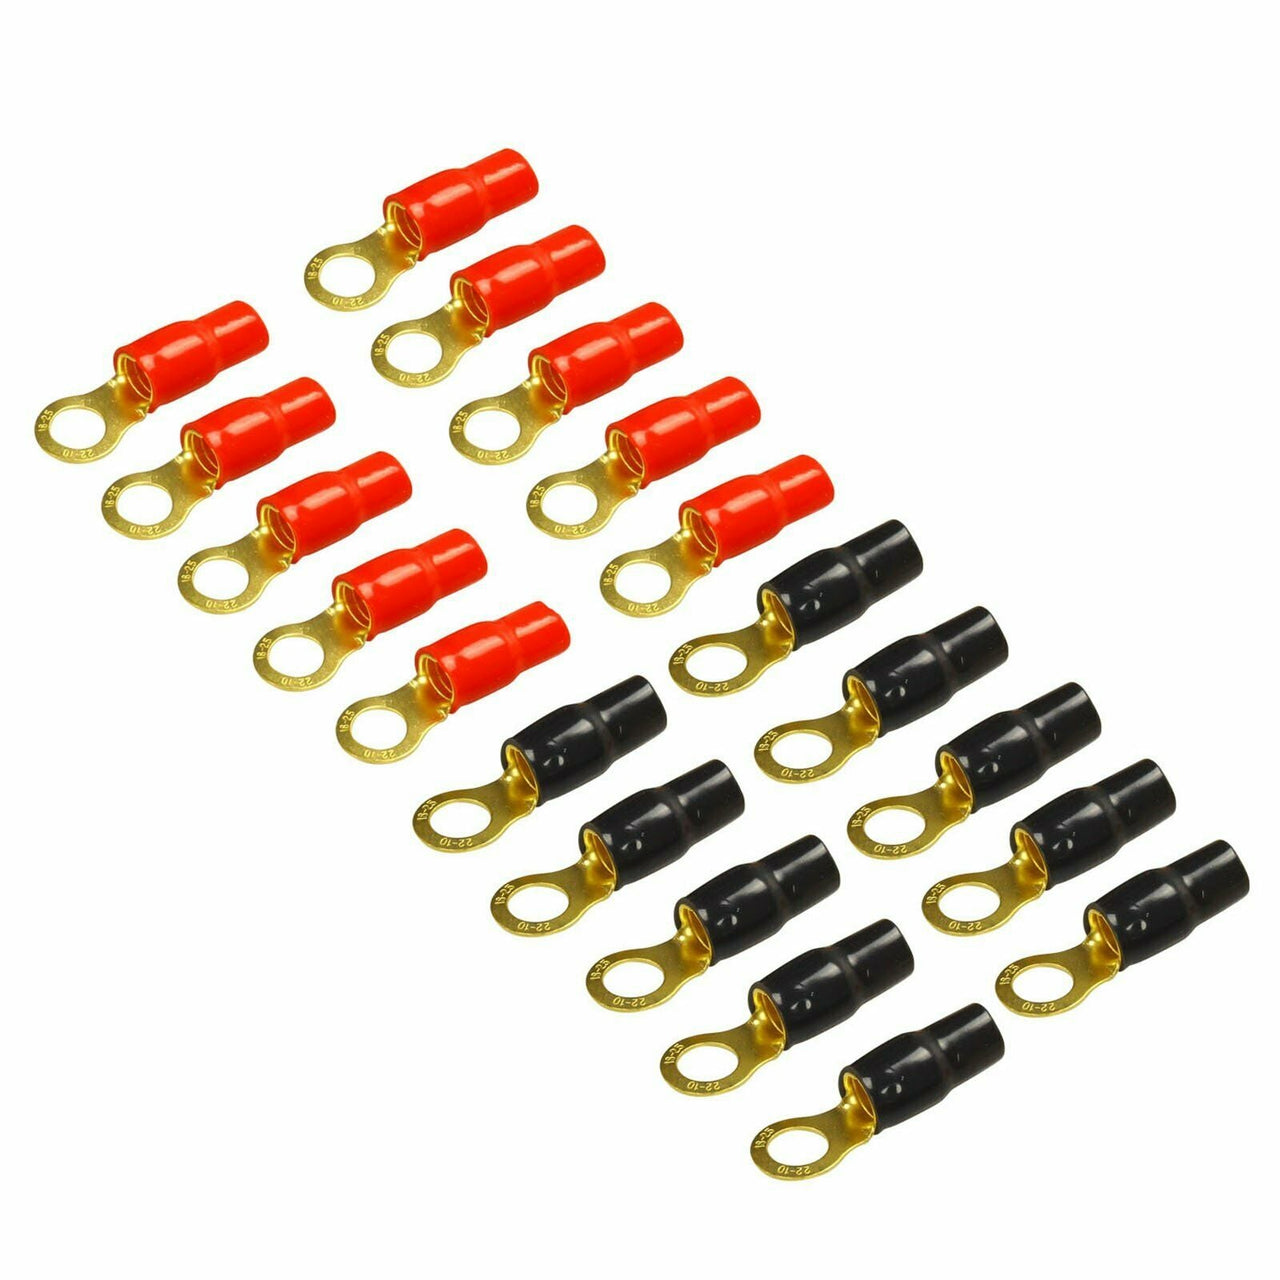 A/T AGRT0020 1/0 Gauge Crimp Ring Terminals Connectors 20-Pack (Red, Black)